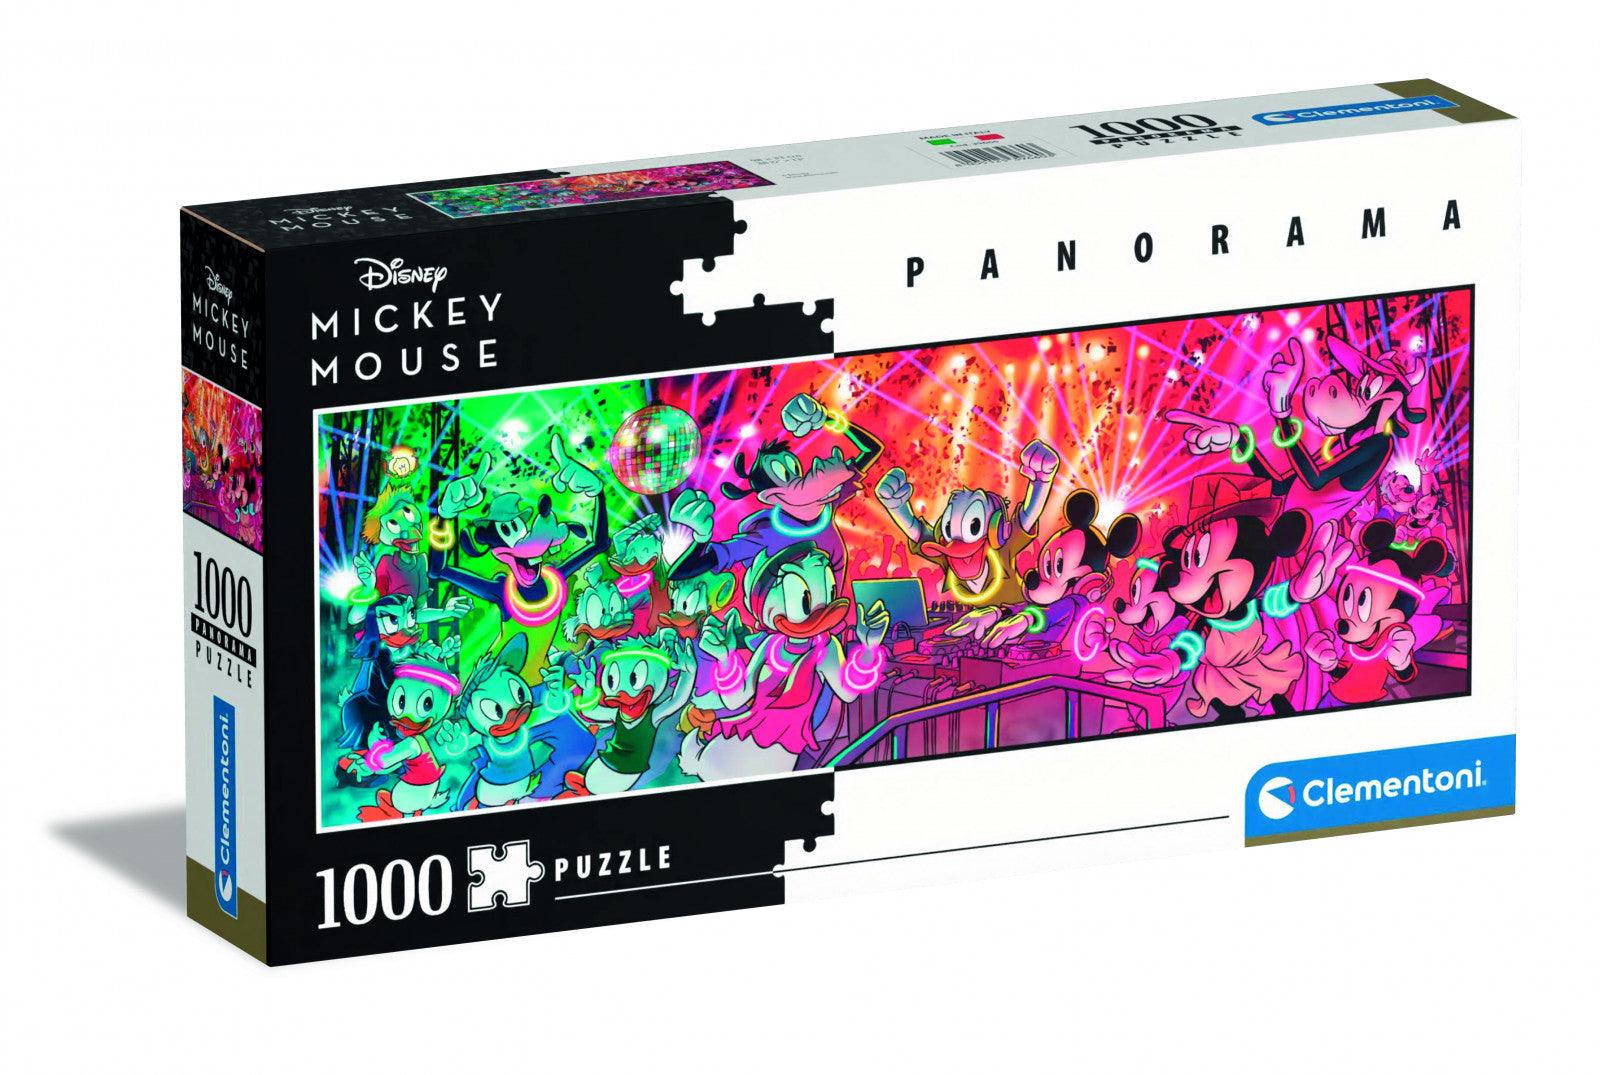 VR-97669 Clementoni Puzzle Mickey Mouse Panorama 1000 pieces - Clementoni - Titan Pop Culture